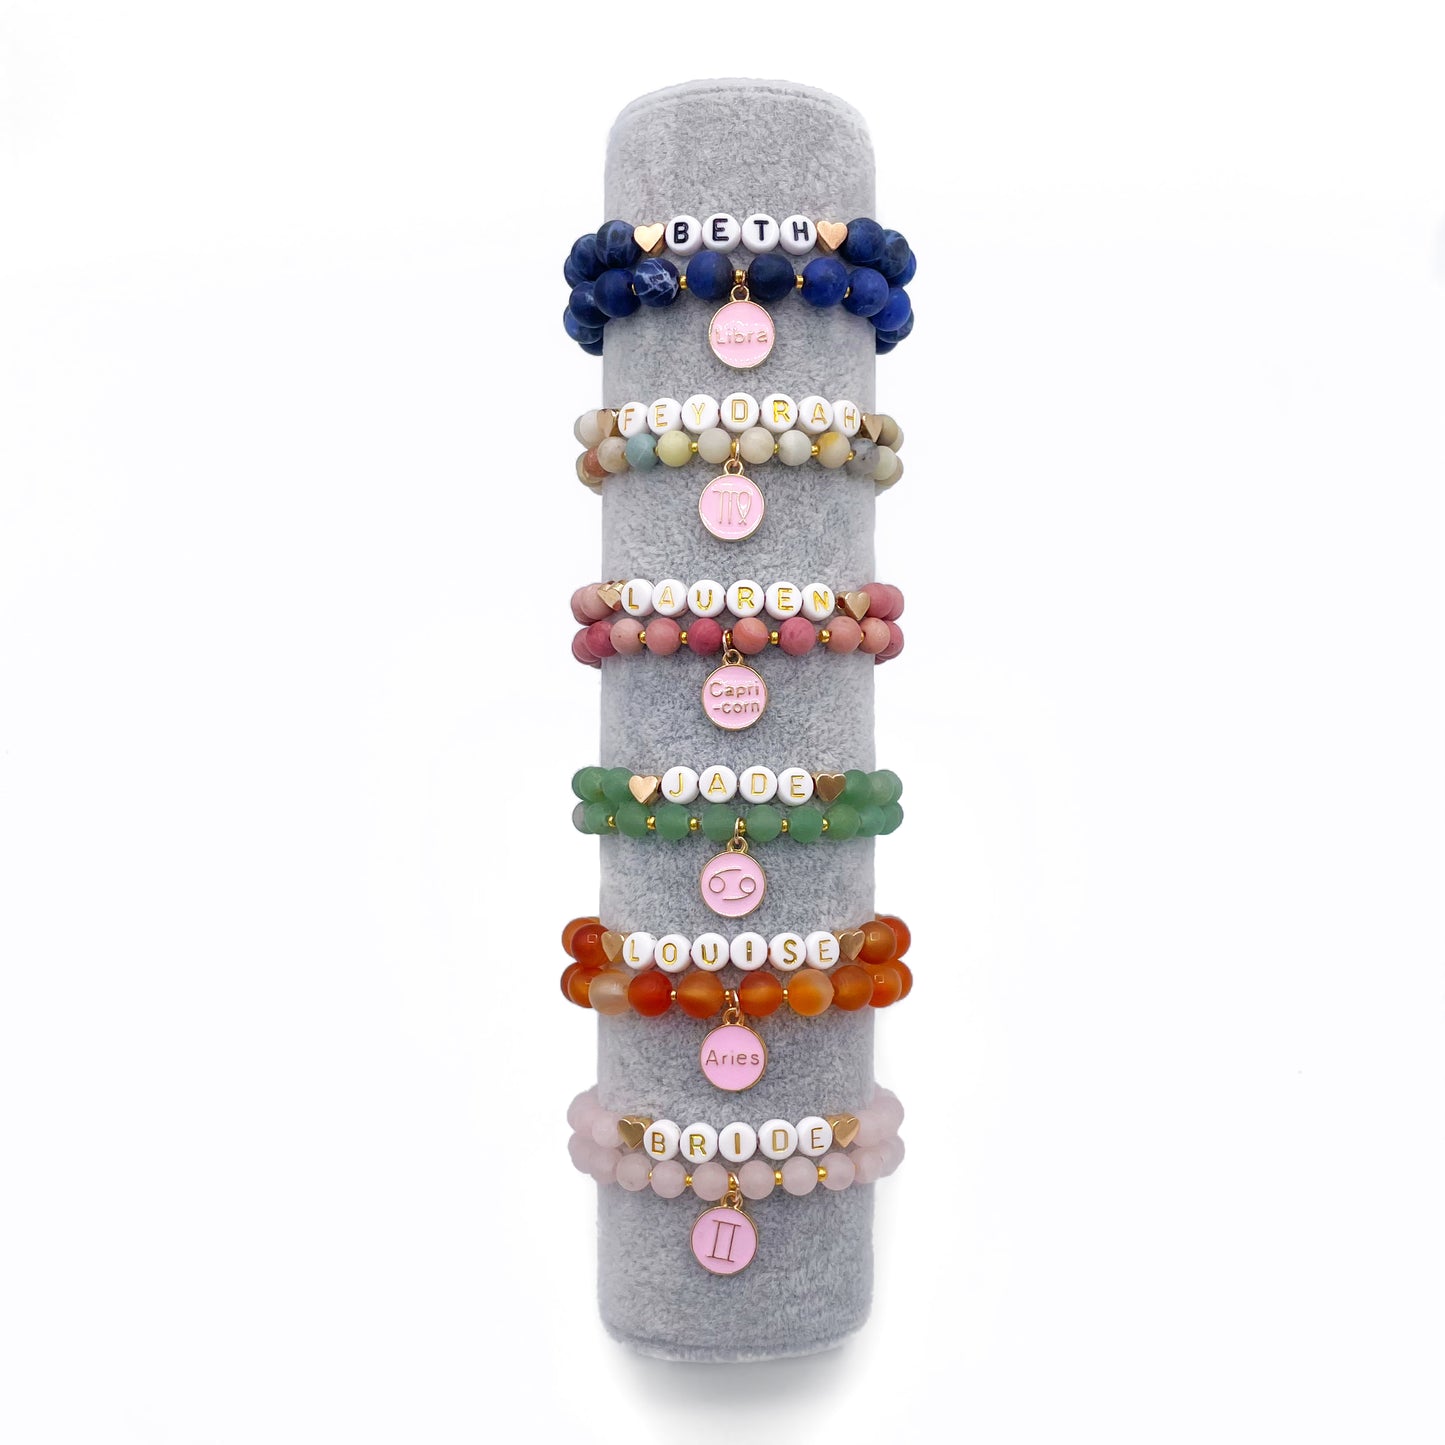 Personalised crystal bracelets